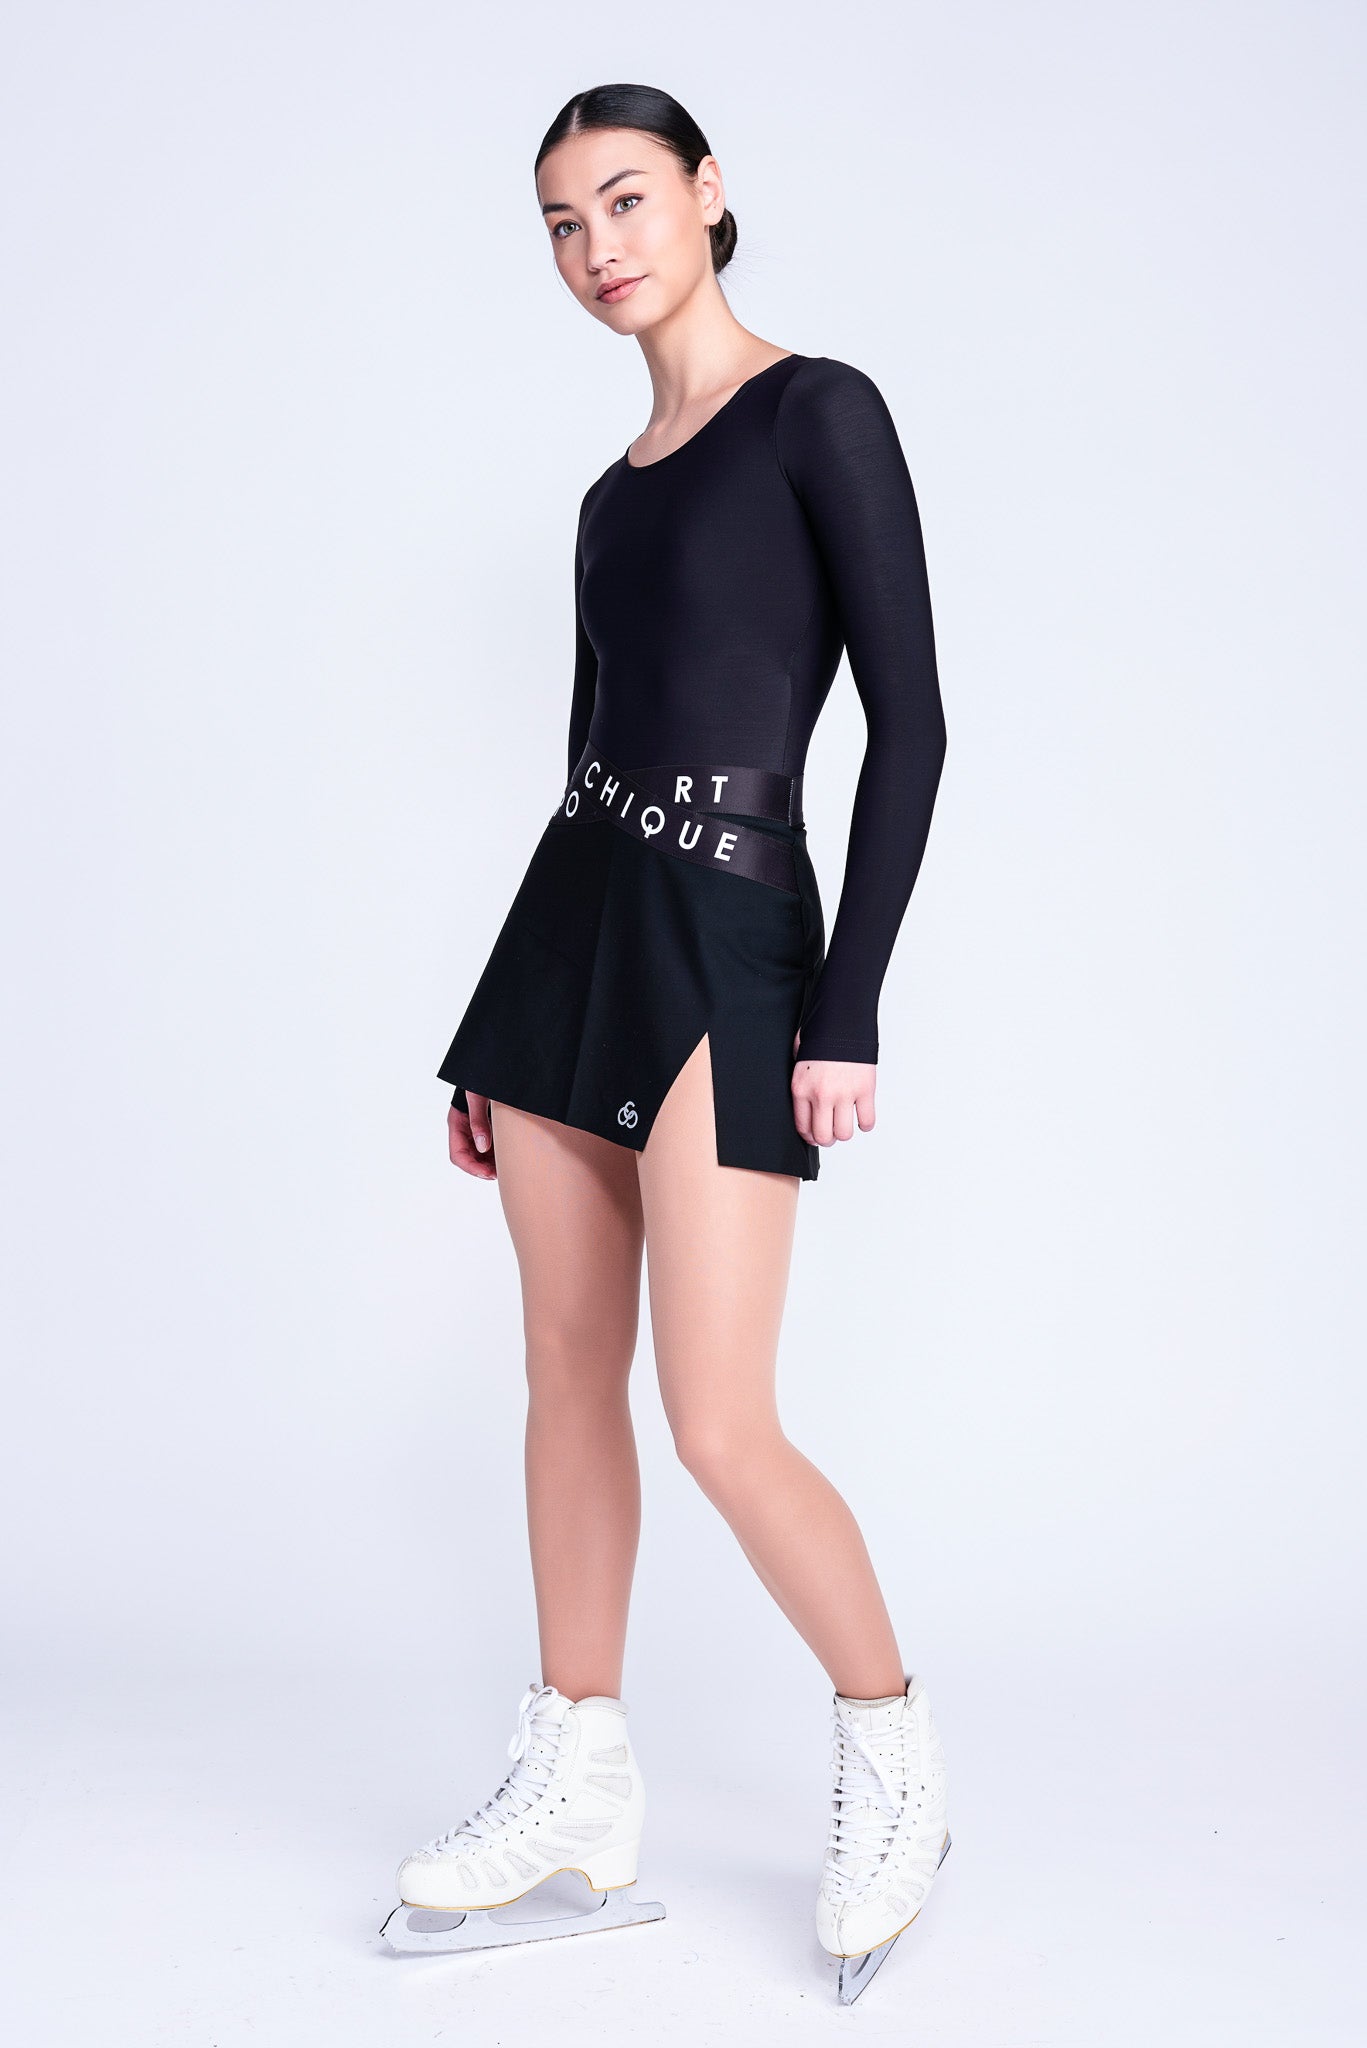 Women's Figure Skating Athletic Skirt in Black